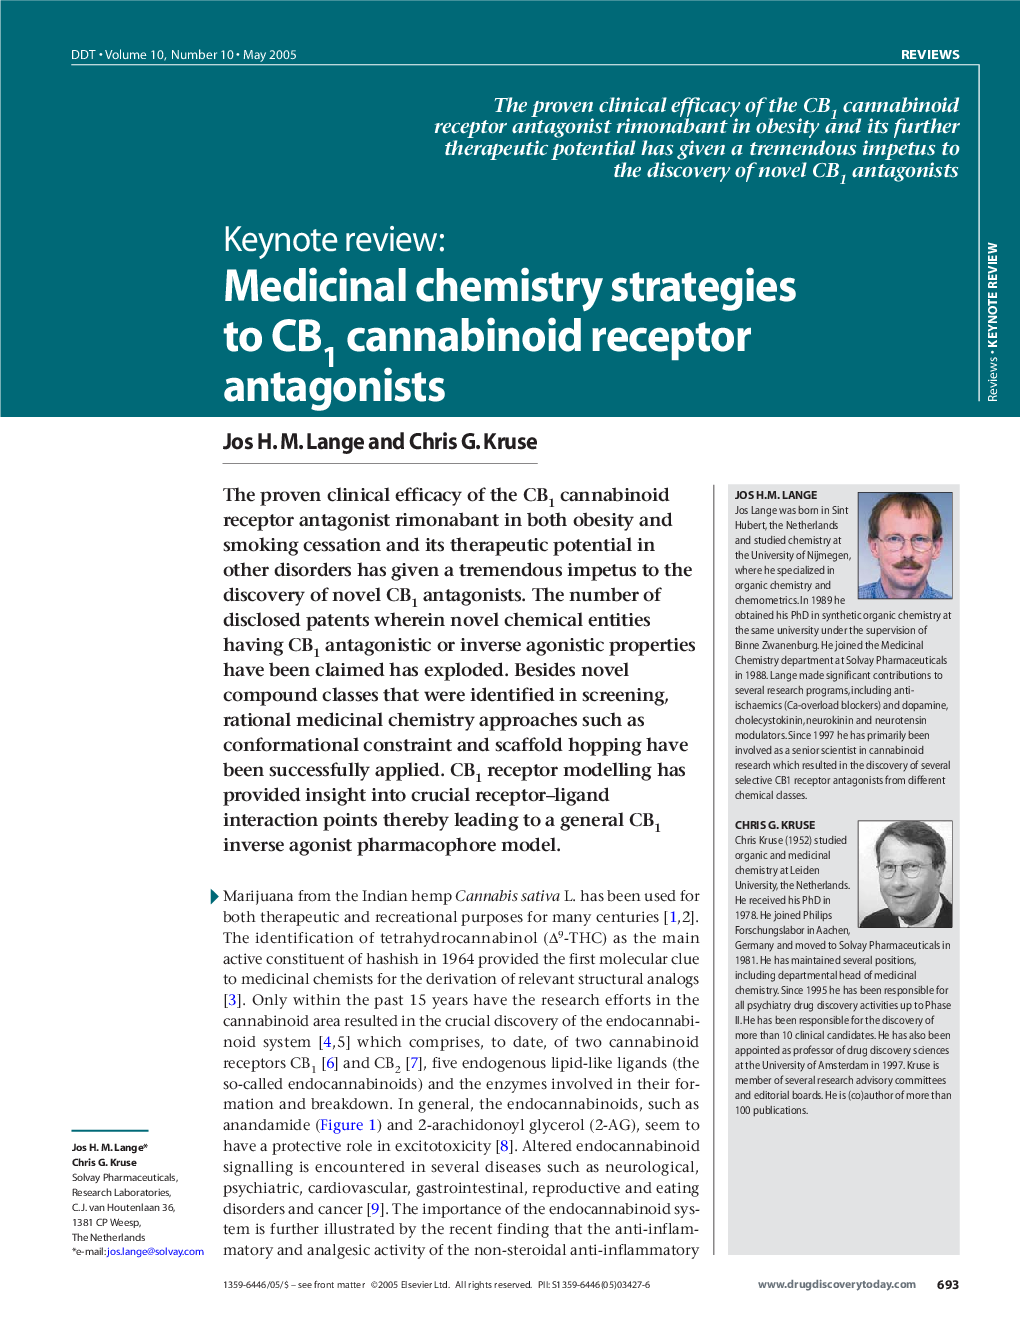 Keynote review: Medicinal chemistry strategies to CB1 cannabinoid receptor antagonists